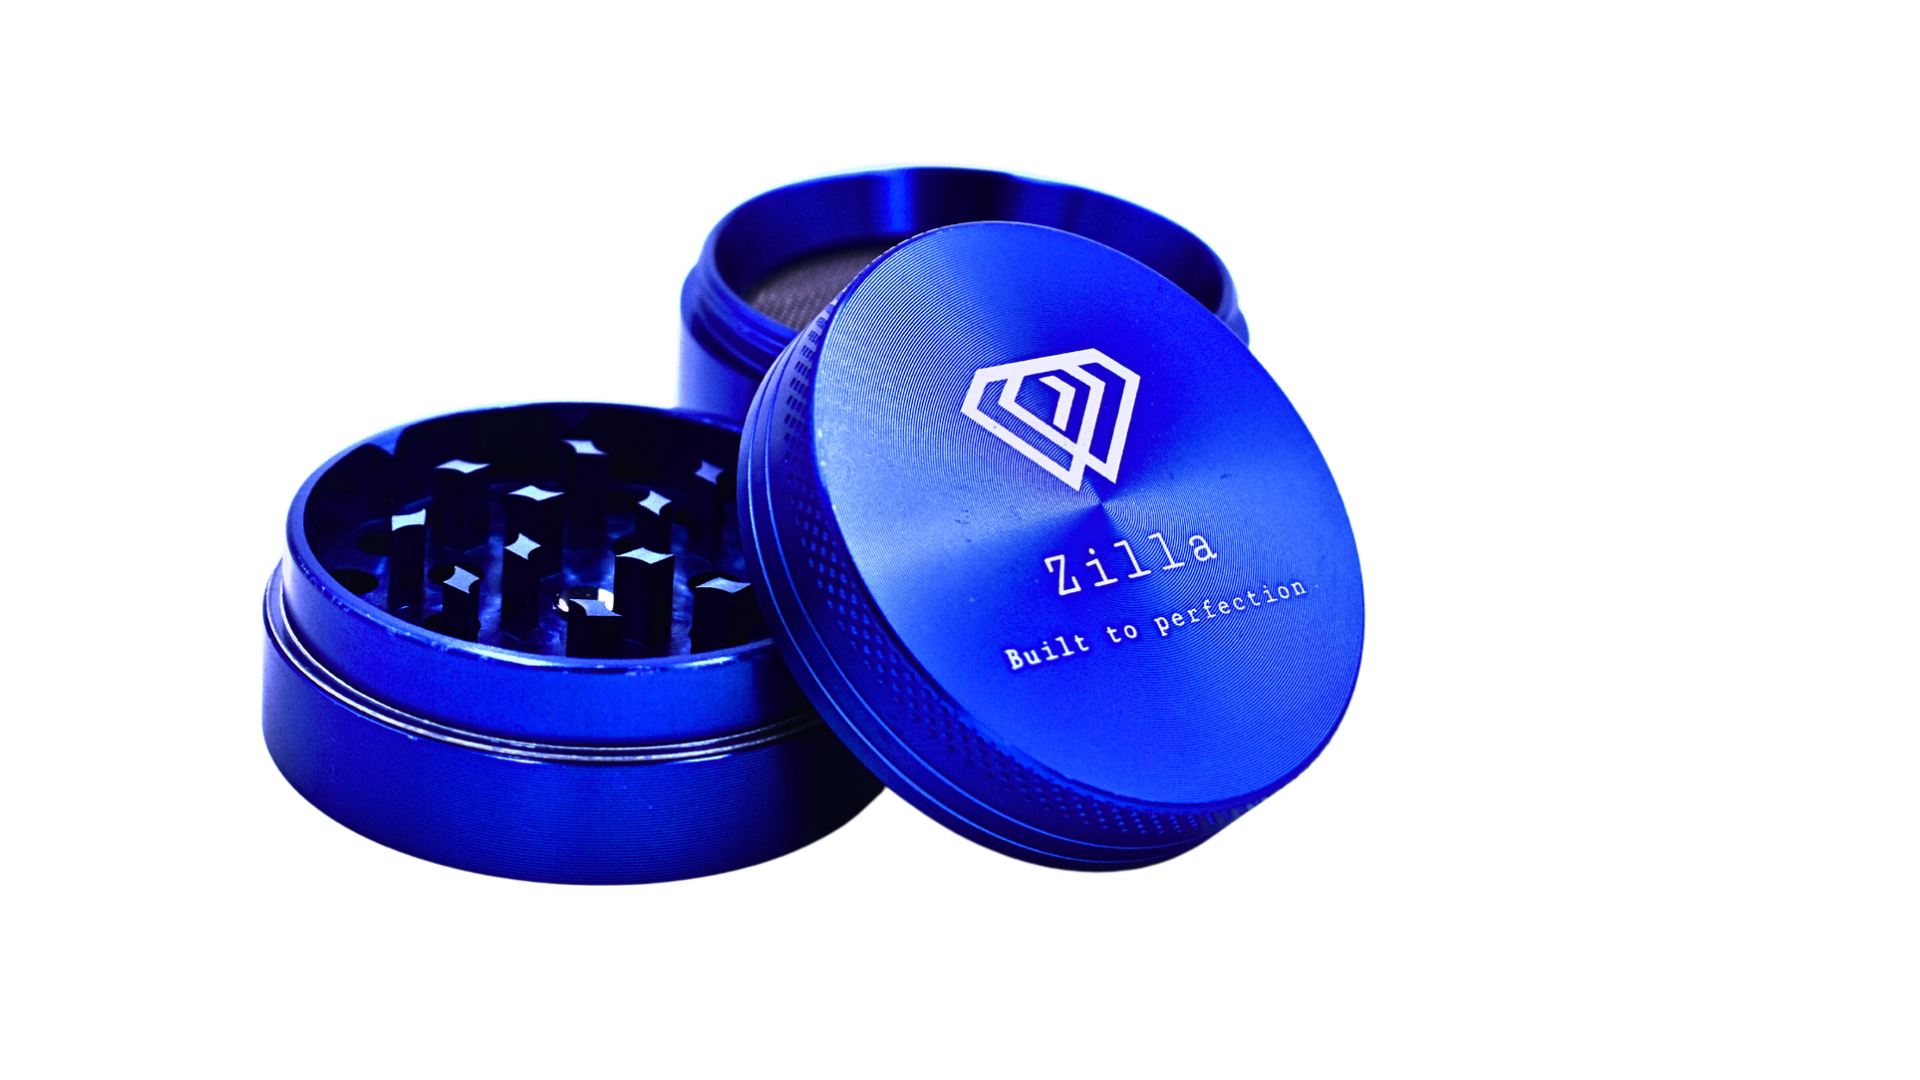 Zilla Aluminium 50mm (Medium Size) Grinder - Blue - Bittchaser Smoke Shop